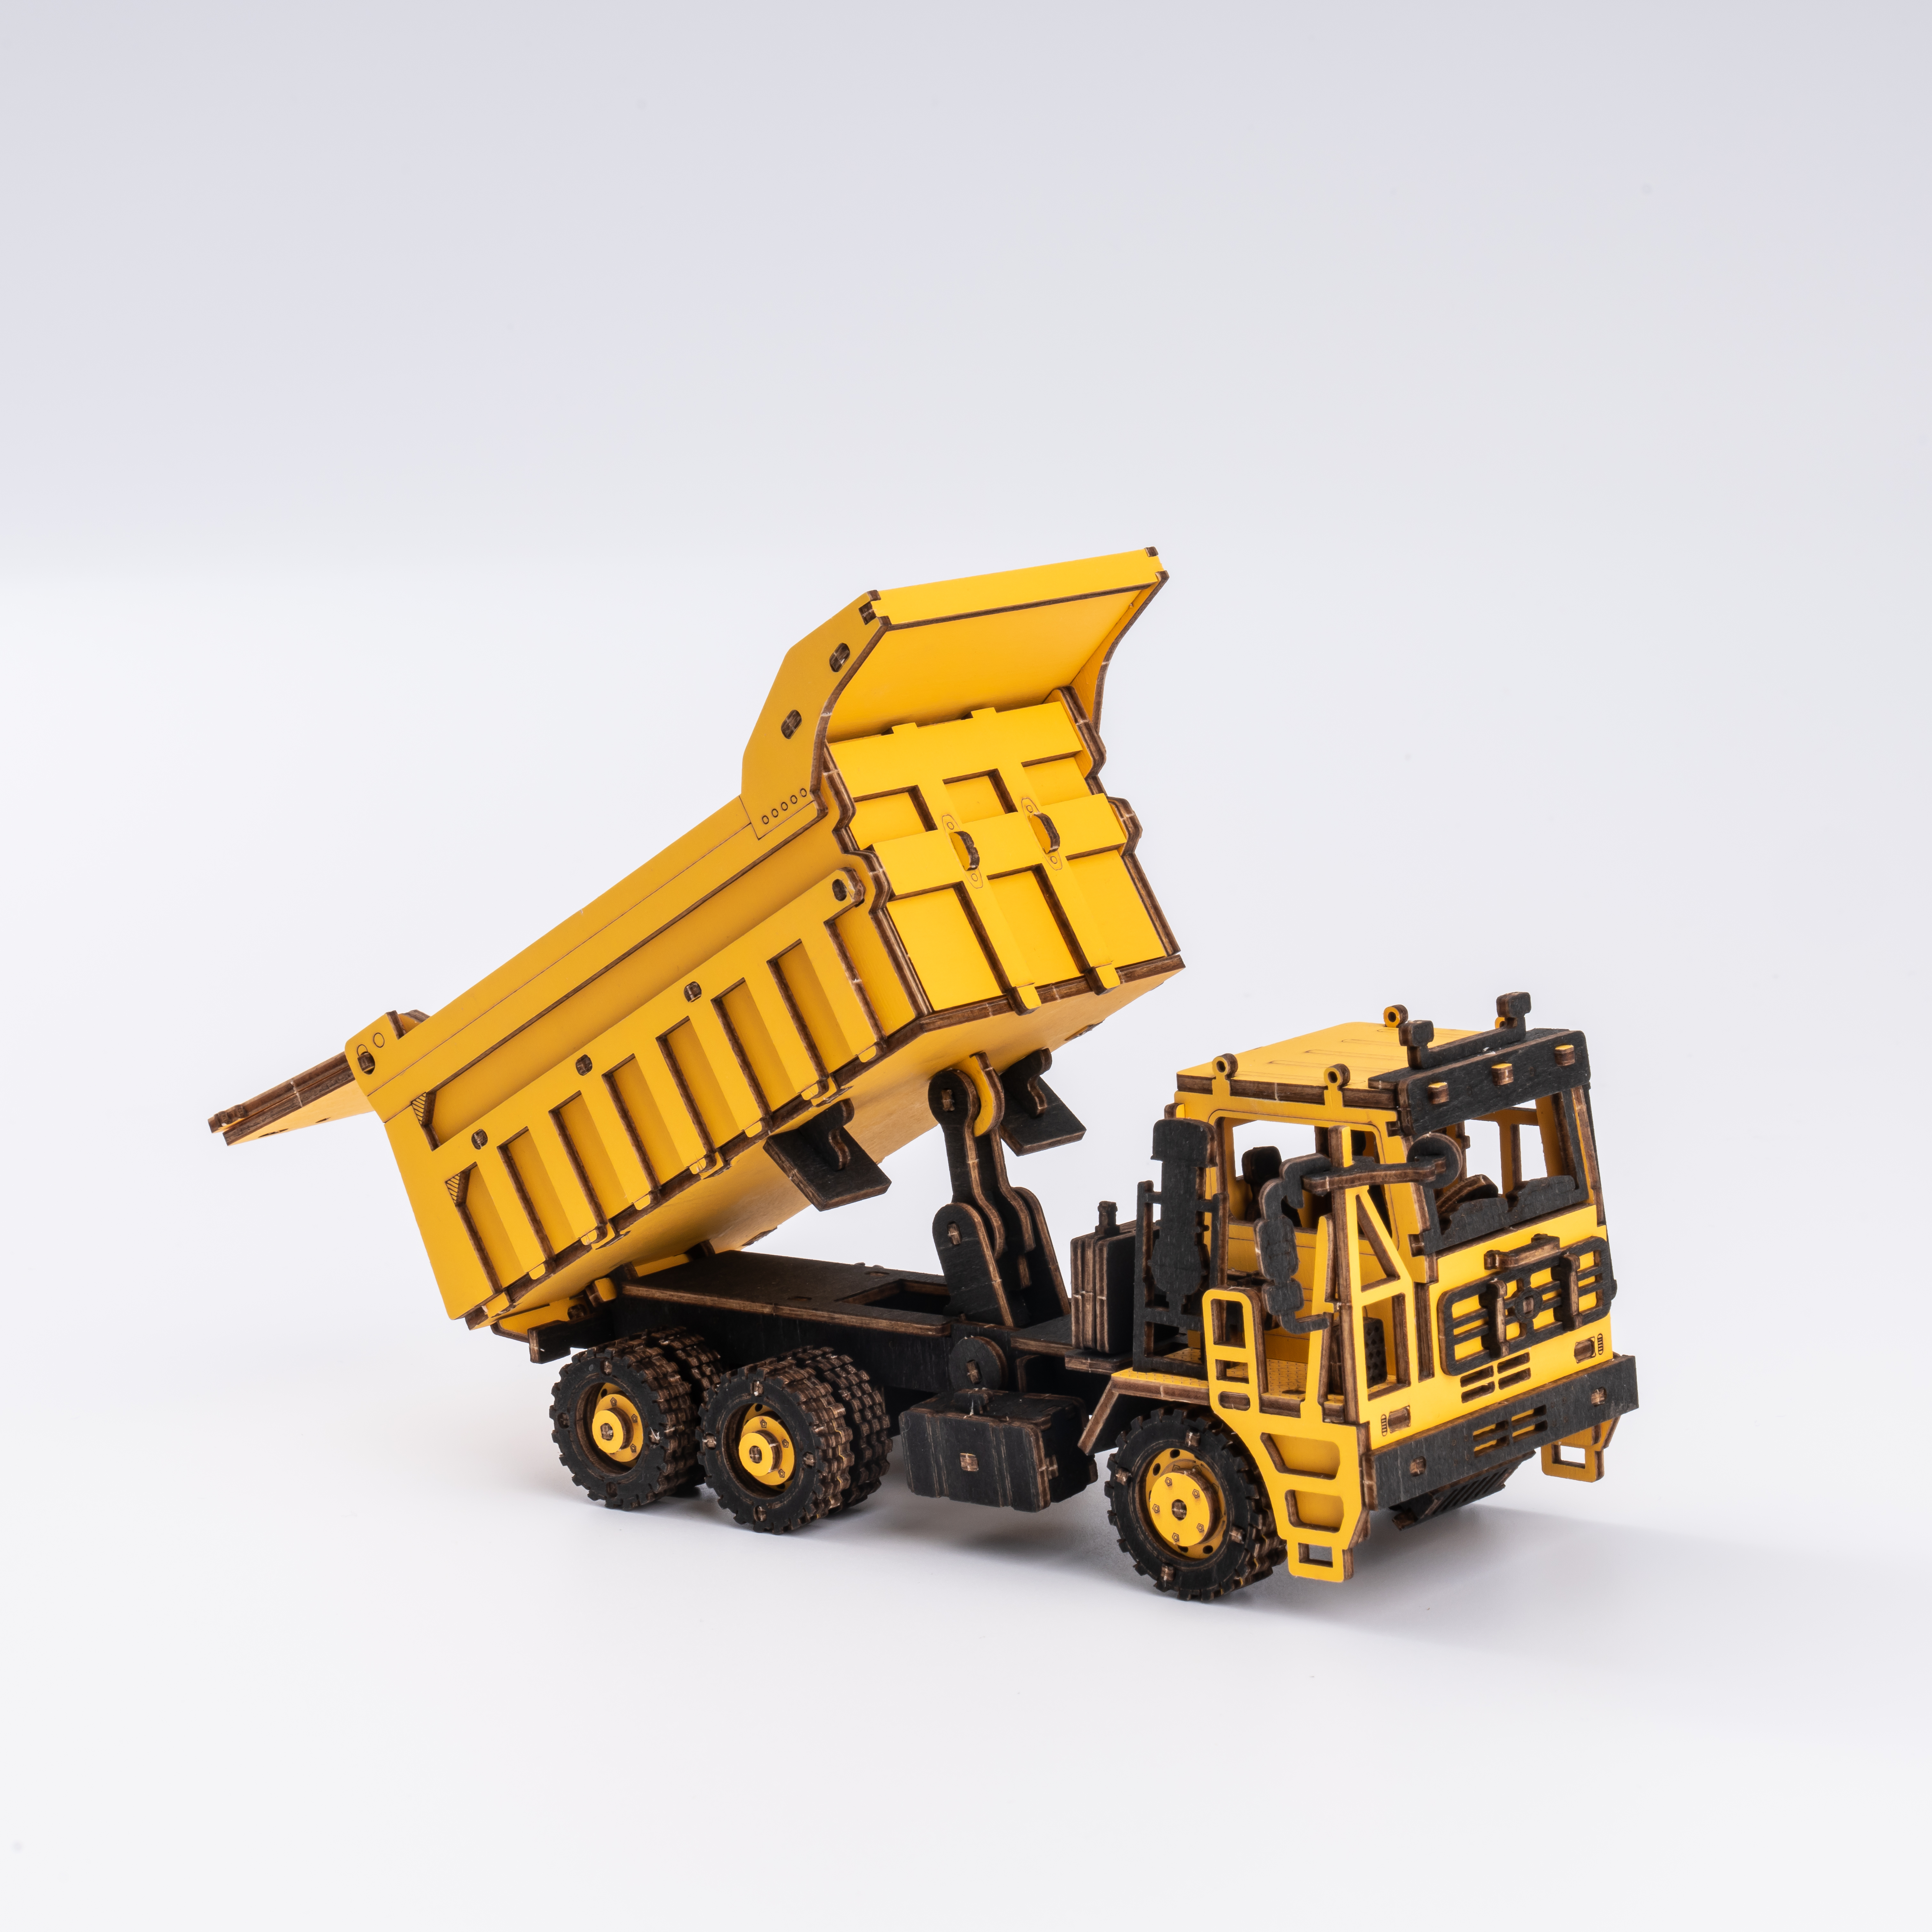 Wooden Dump Truck Engineering Vehicle 3D Wooden Puzzle TG603K 9